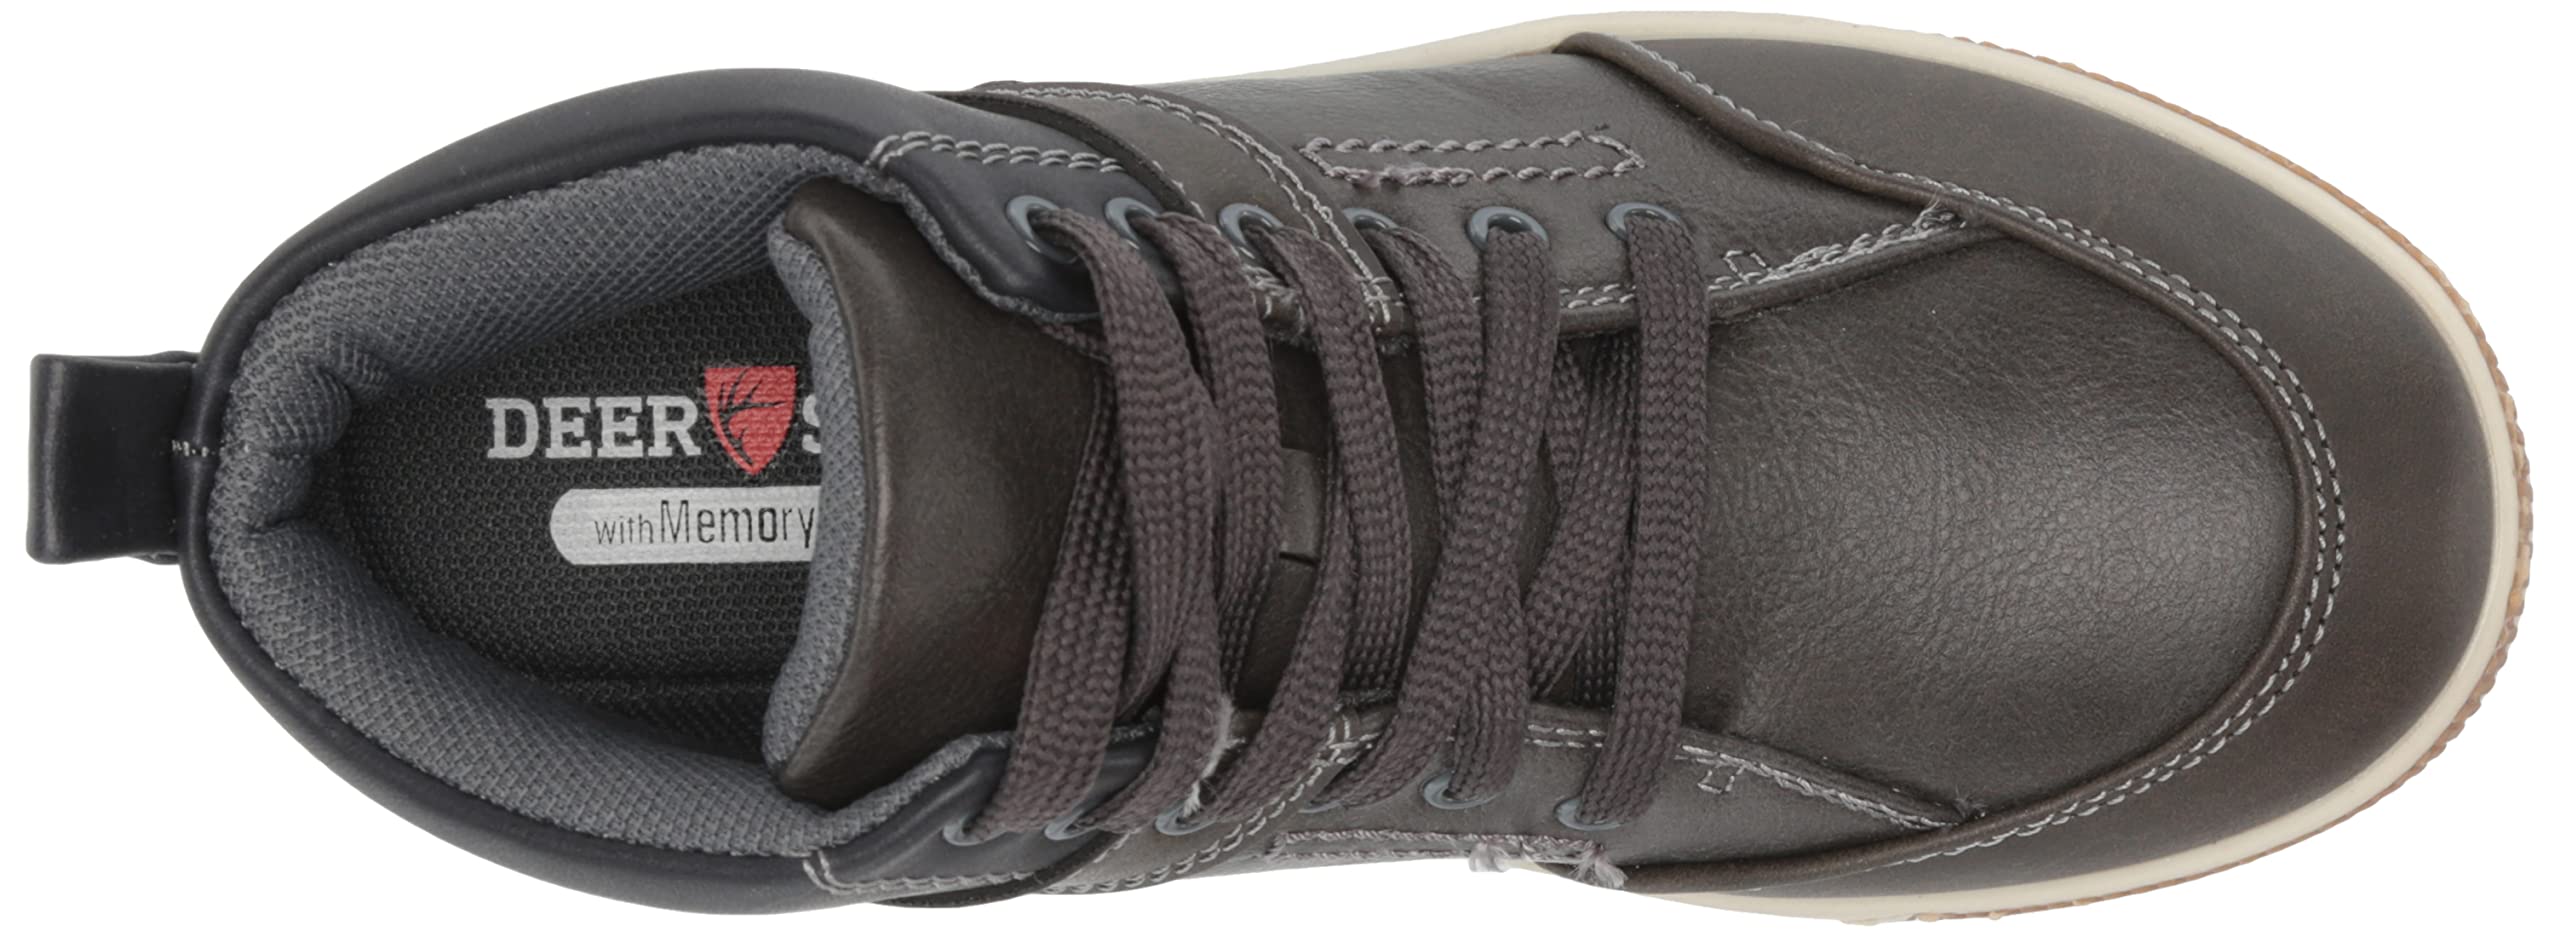 Deer Stags Unisex-Child Landry Memory Foam Dress Casual Comfort High Top Sneaker Boot